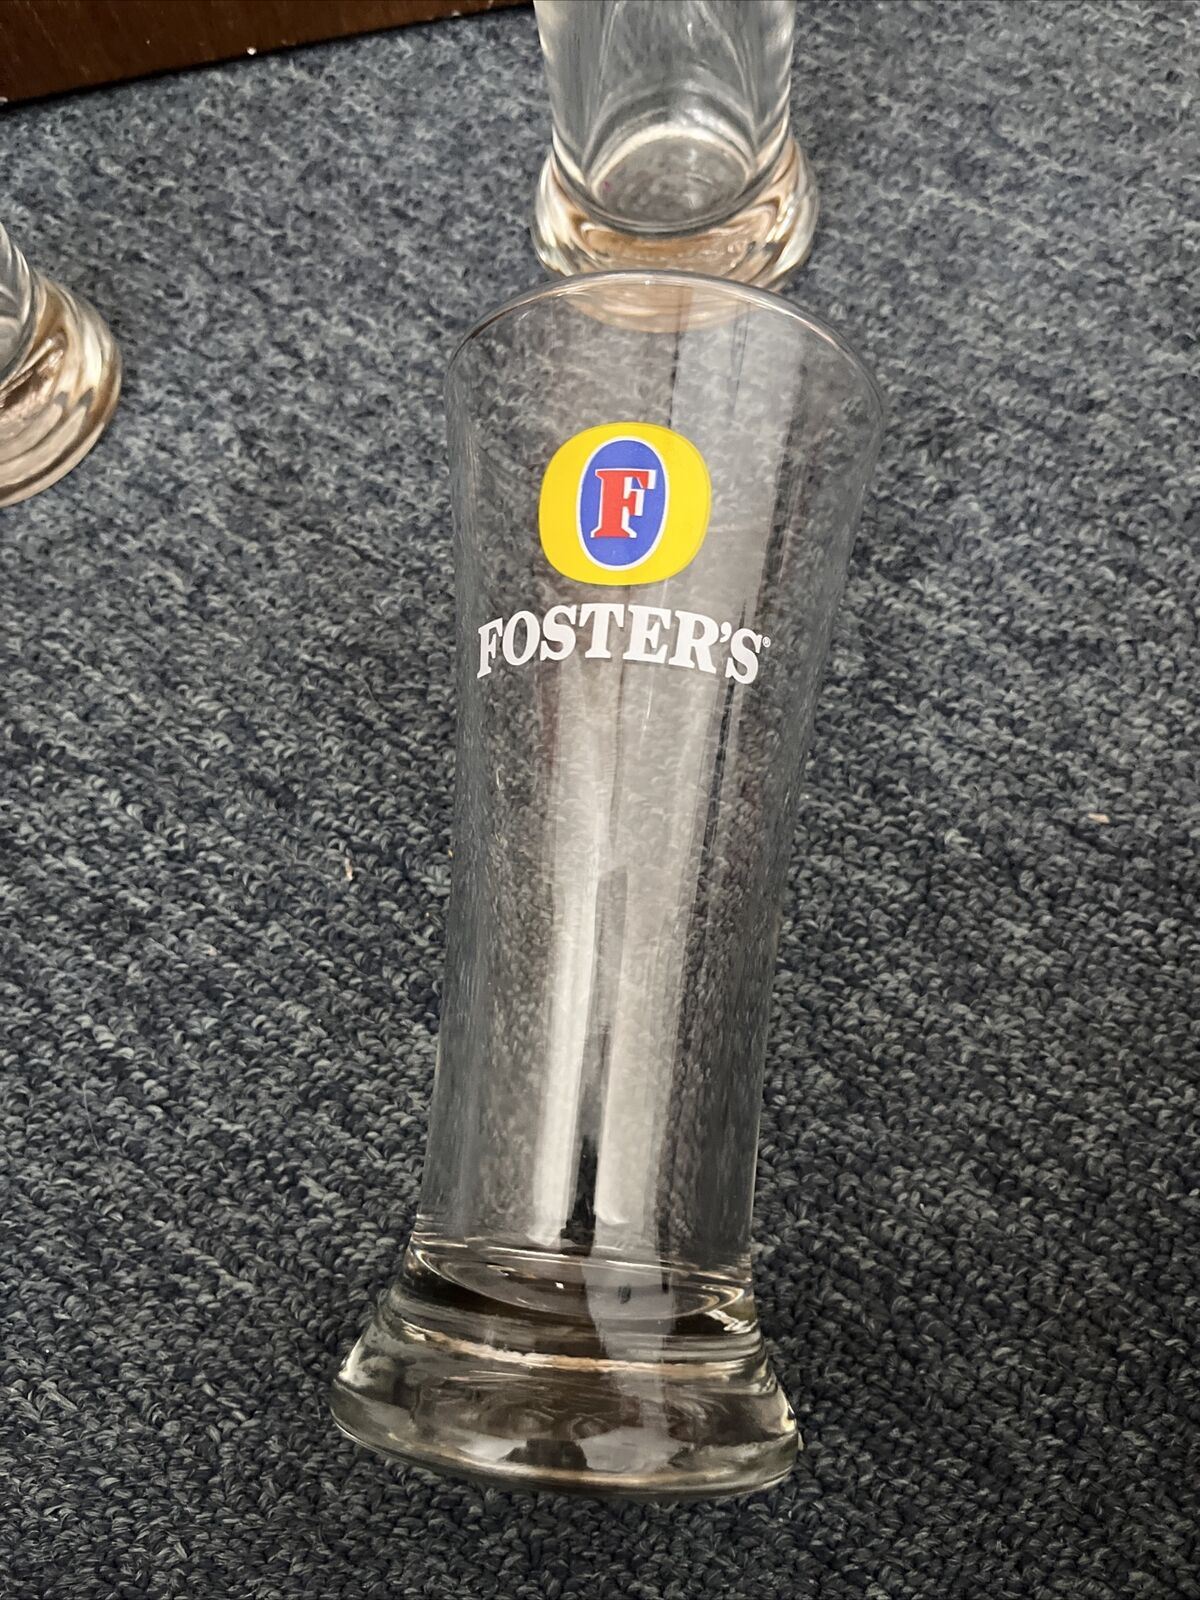 Foster's, Light ice, Red Back Original, Carlton Draught Drinking Glasses 285ml